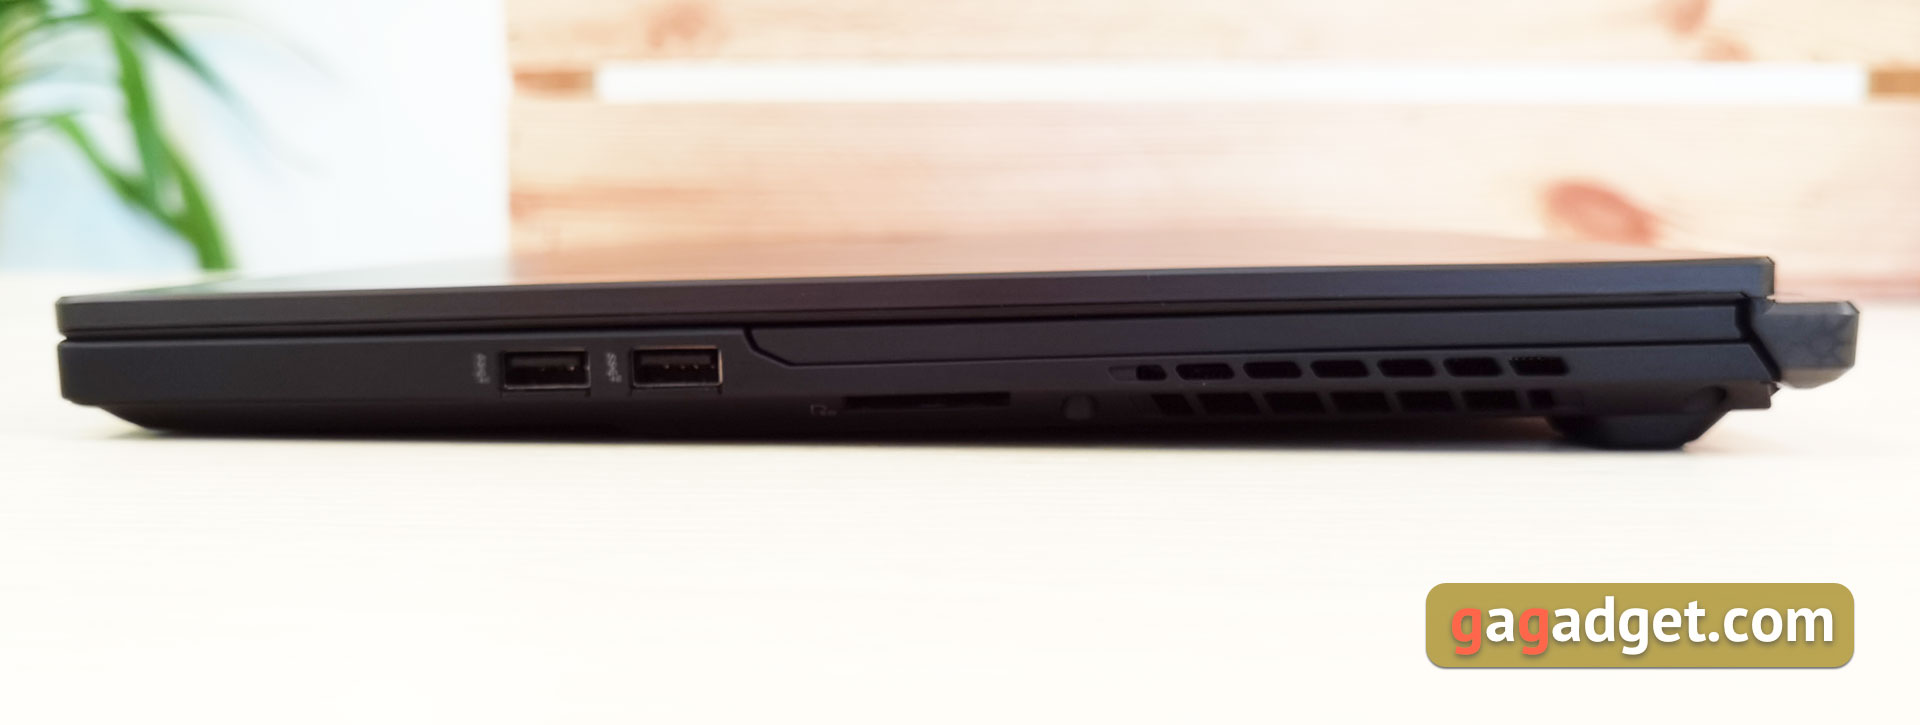 ASUS ROG Zephyrus S17 GX703 im Test: ein All-in-One-Gaming-Laptop-6